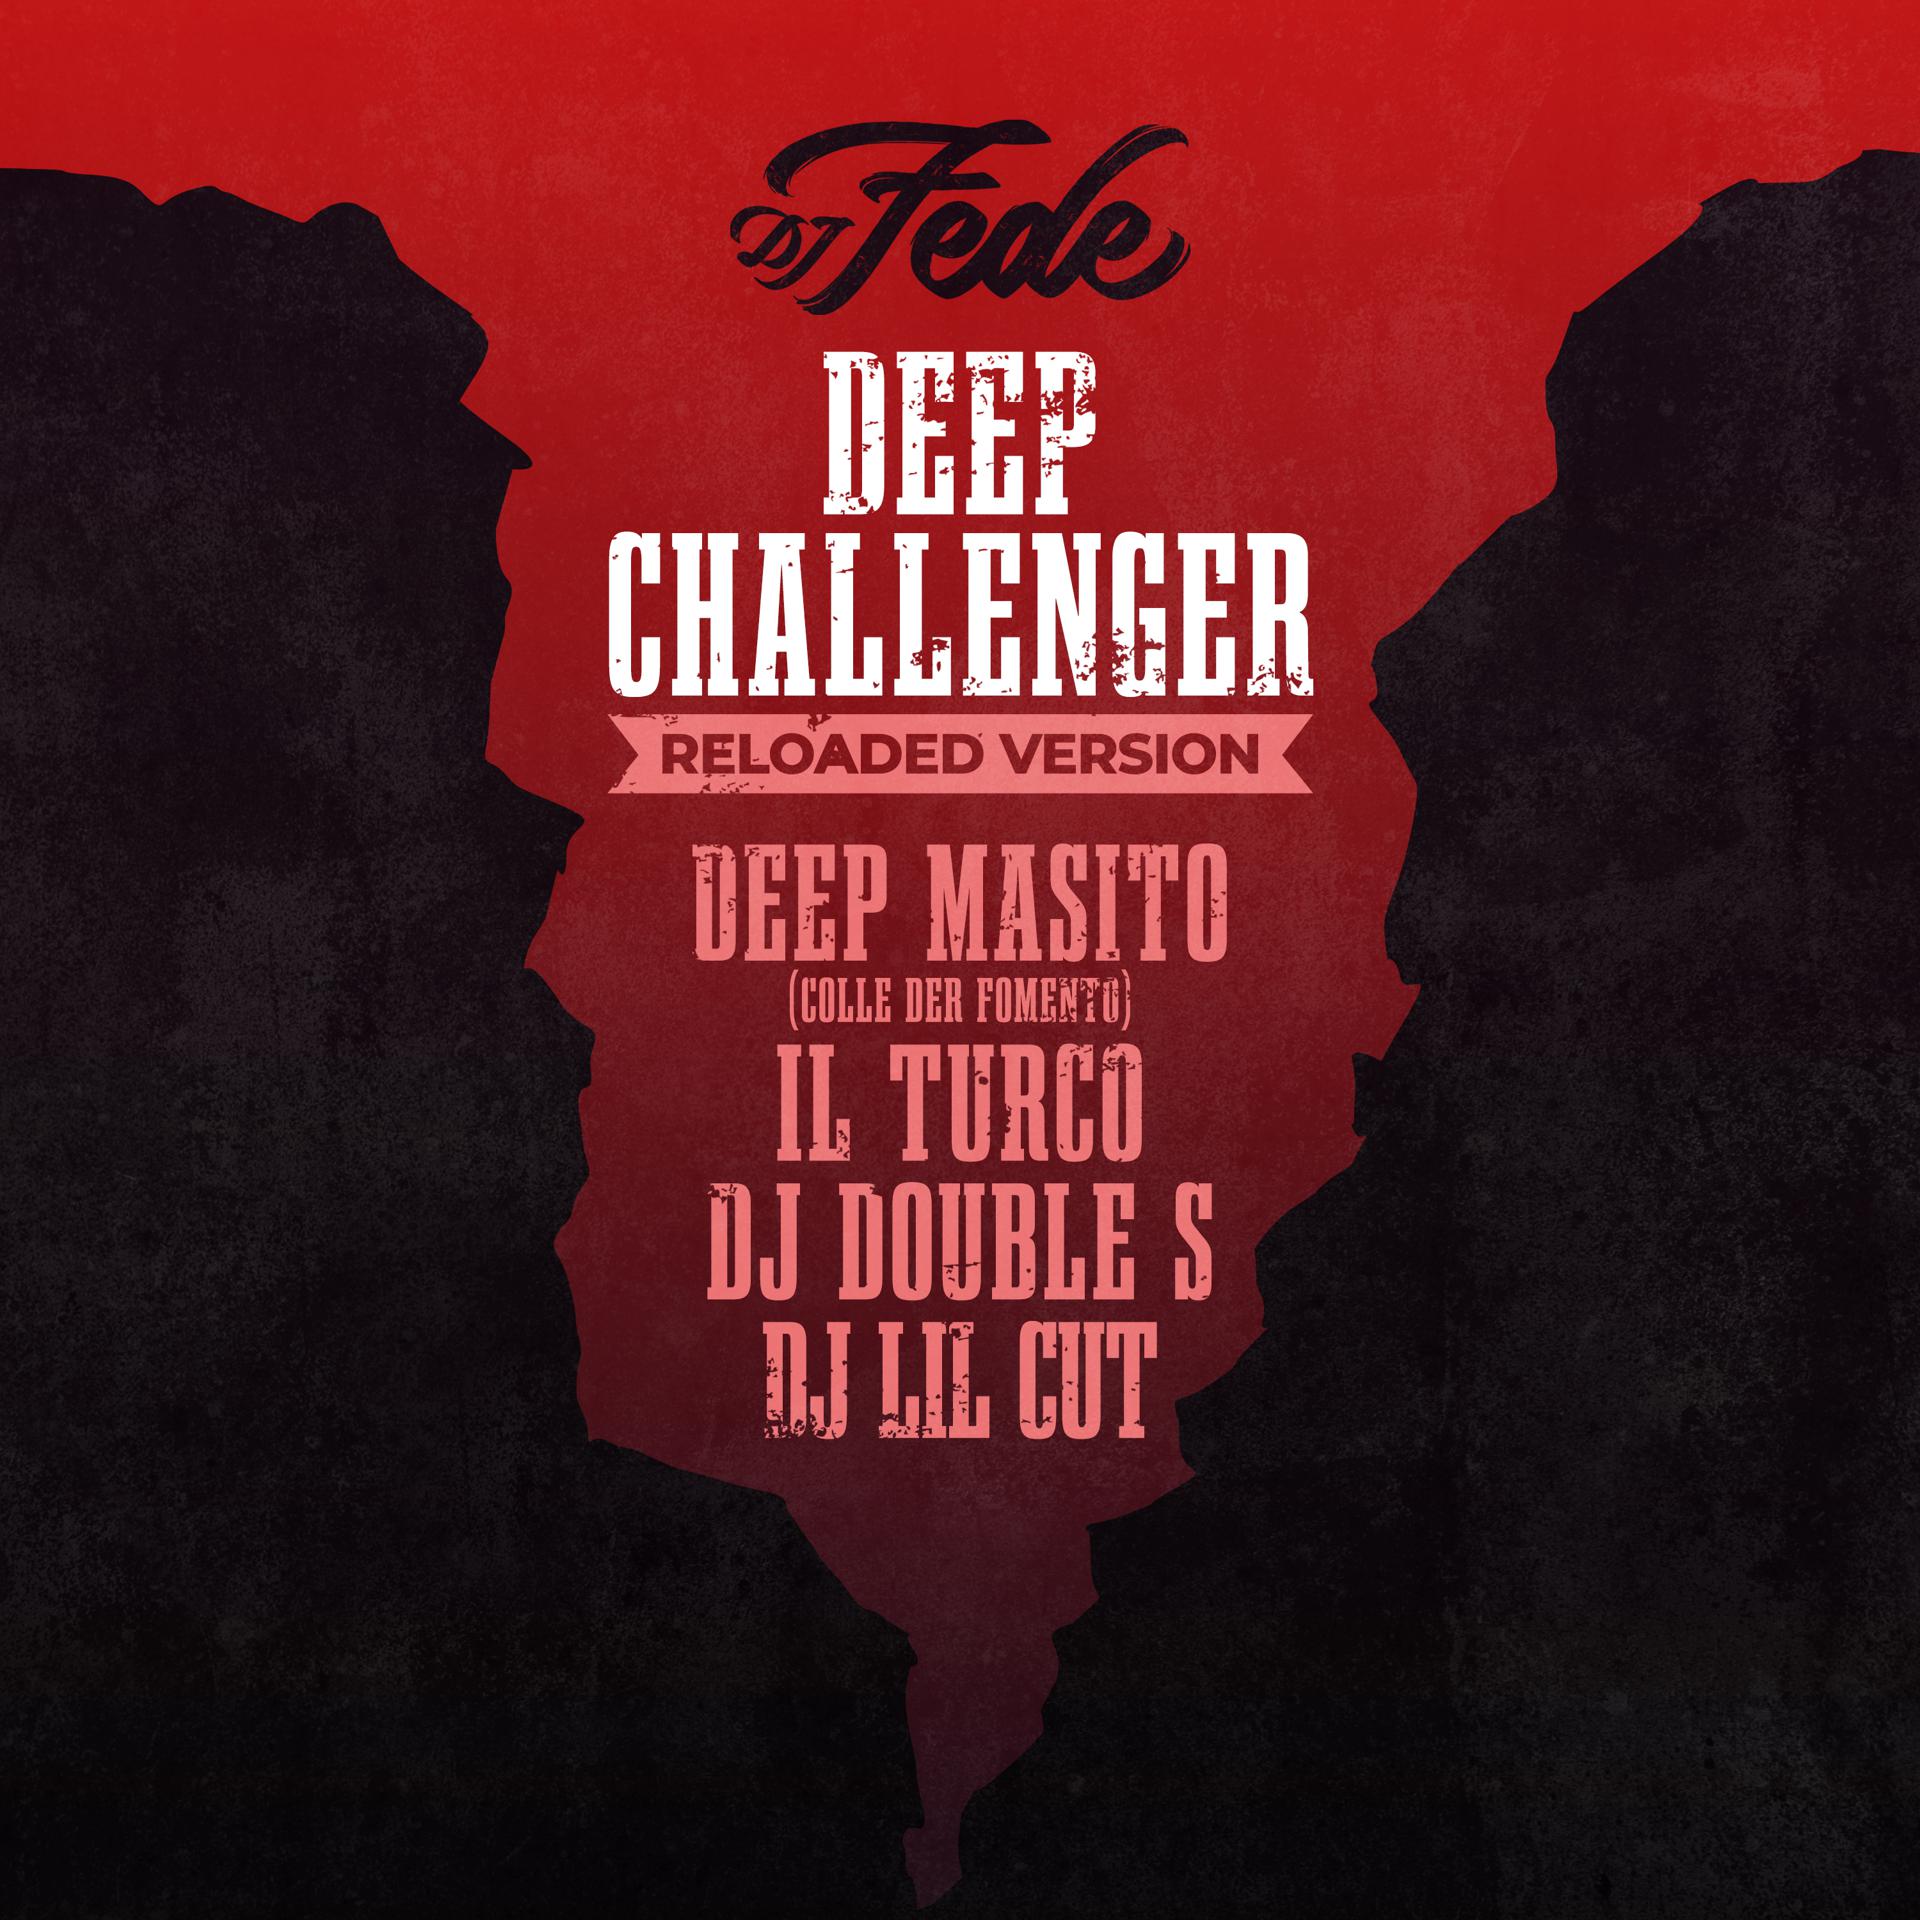 Постер альбома Deep Challenger